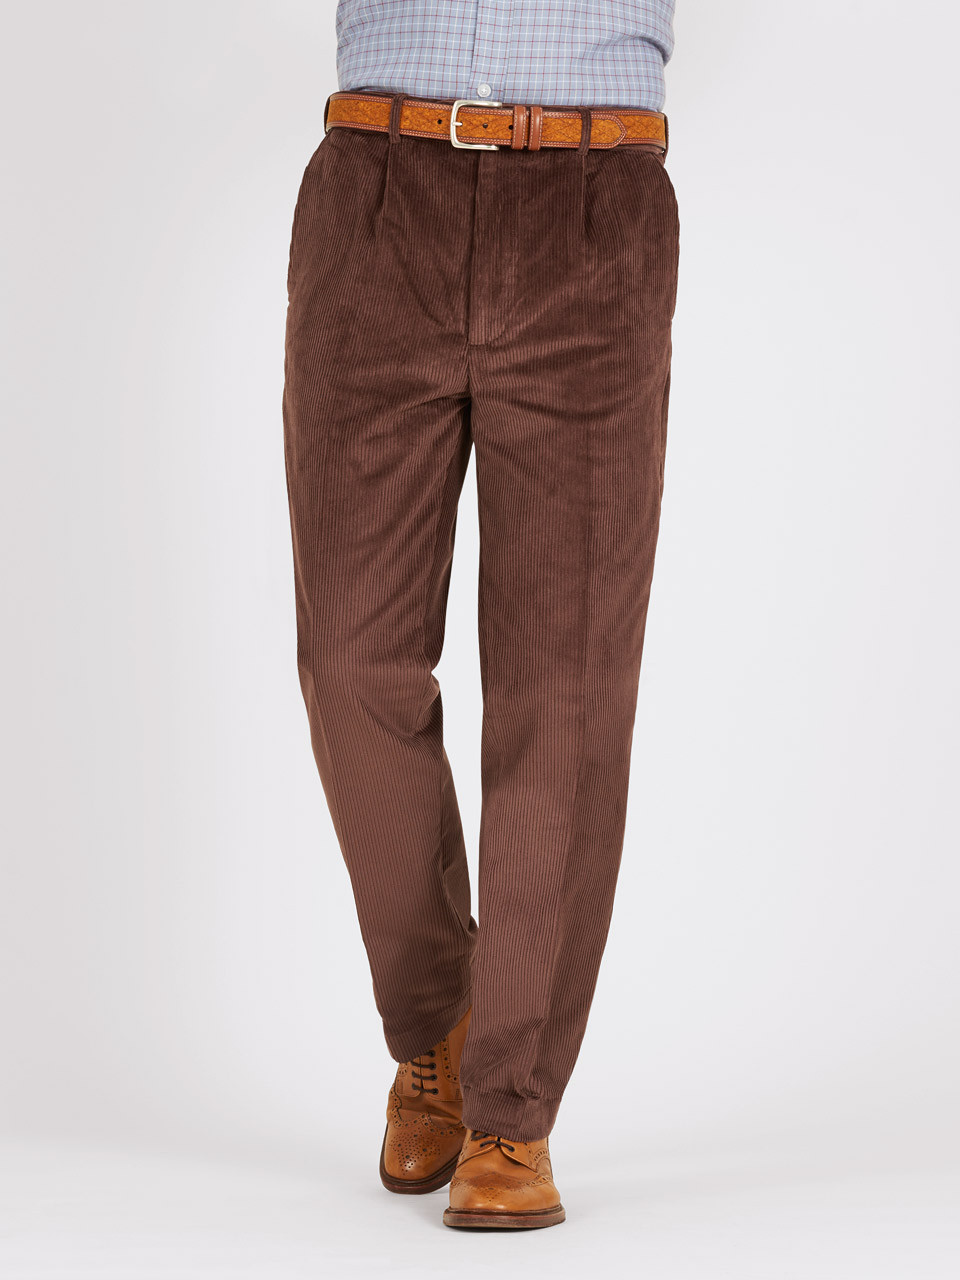 Stylish Coffee Brown Corduroy Trousers